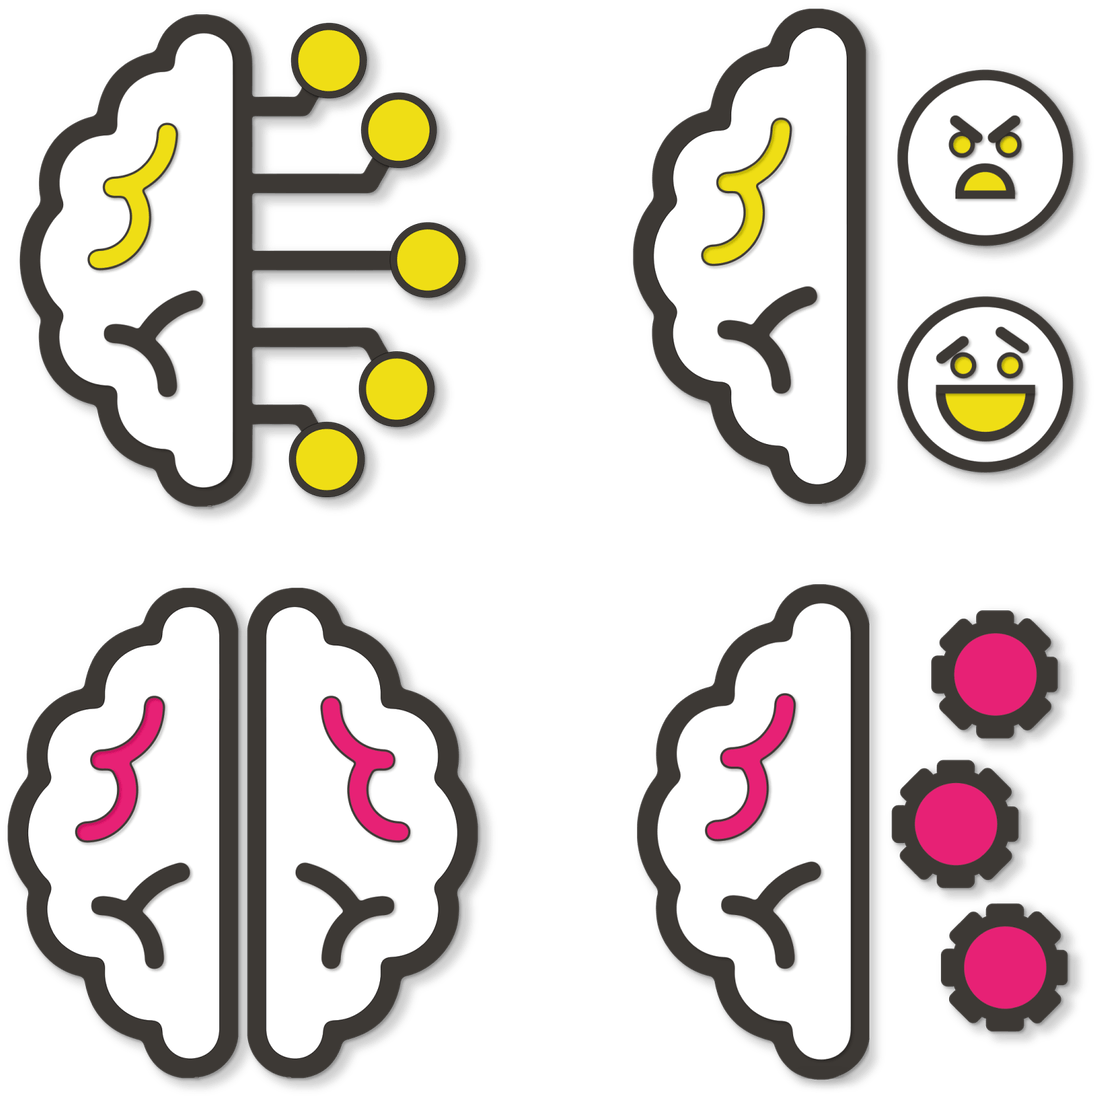 The four brain systems